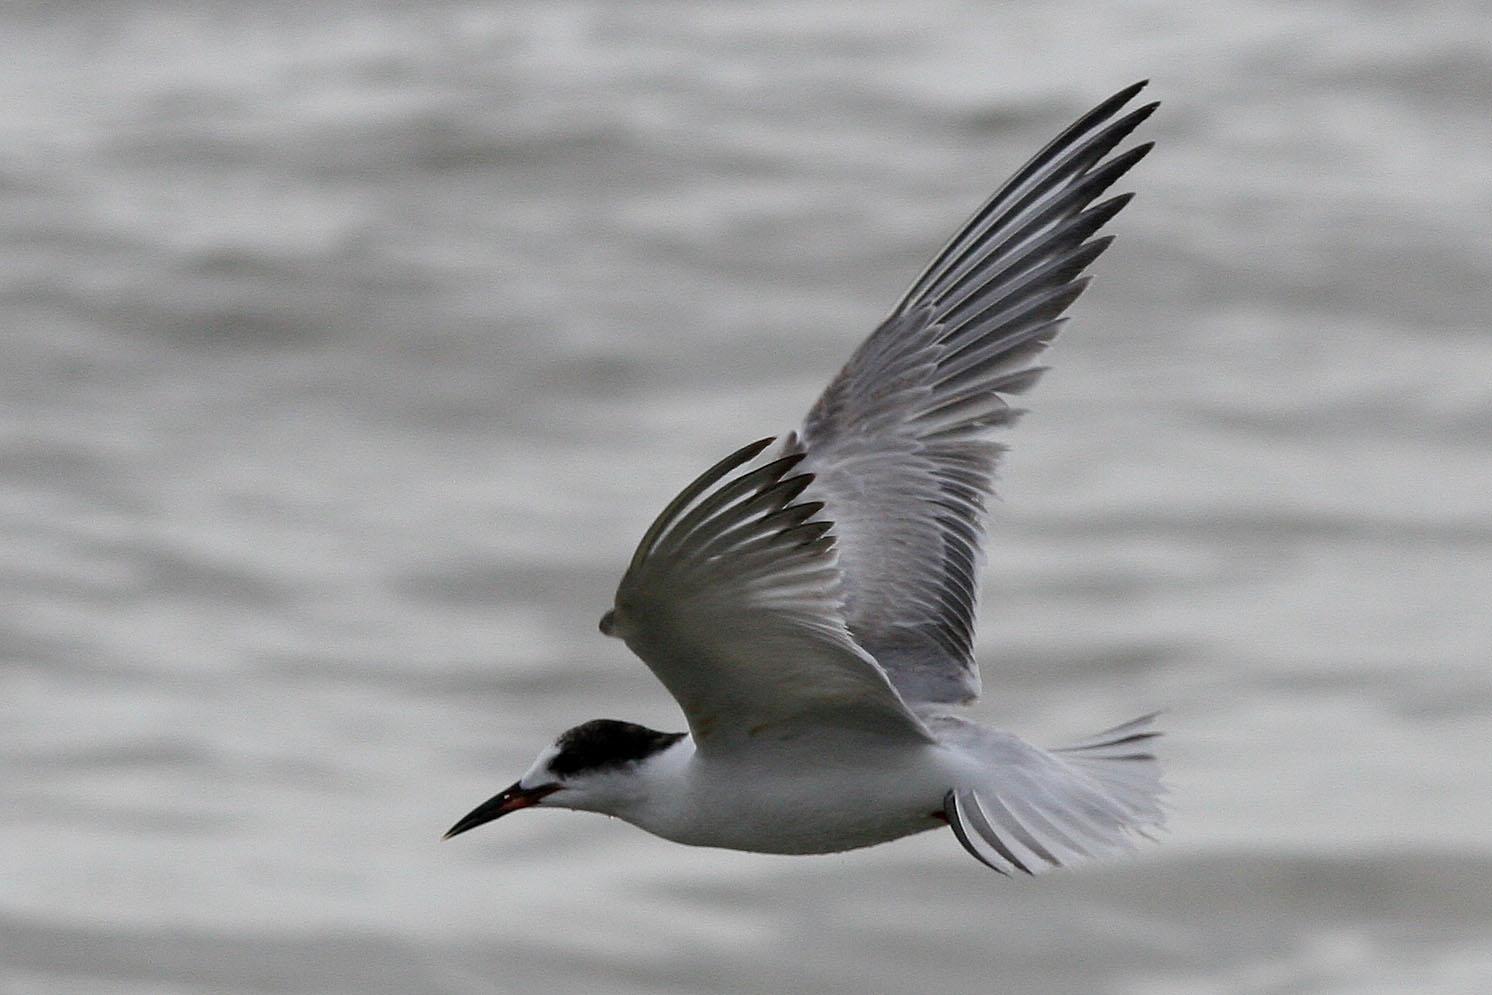 Common Tern Photo by David Sarkozi